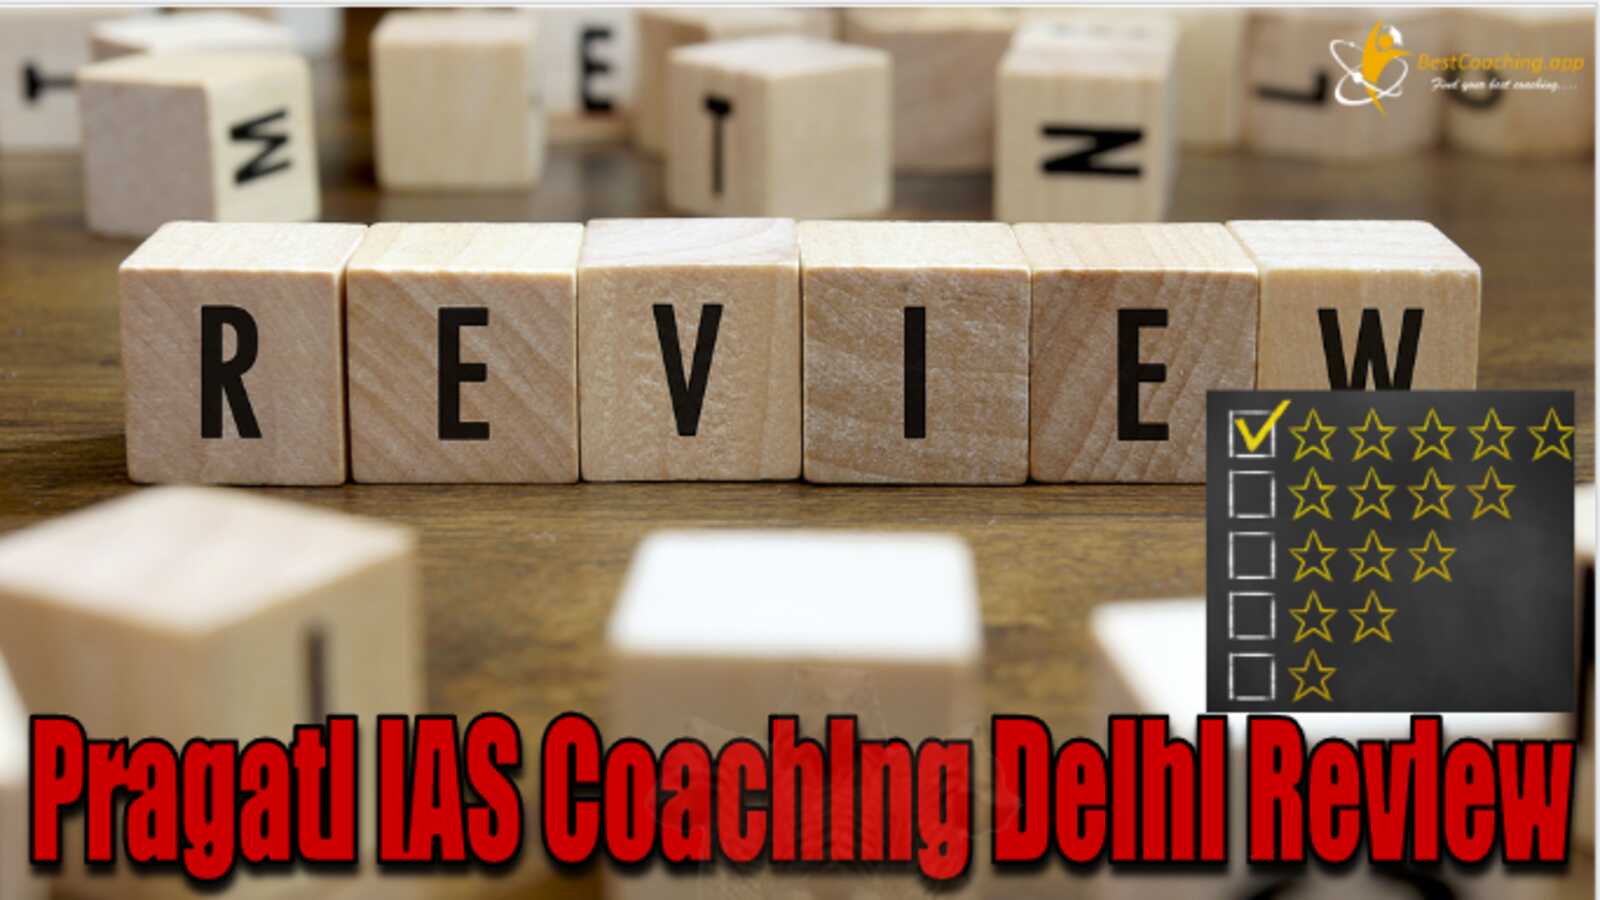 Pragati IAS Coaching Delhi Review